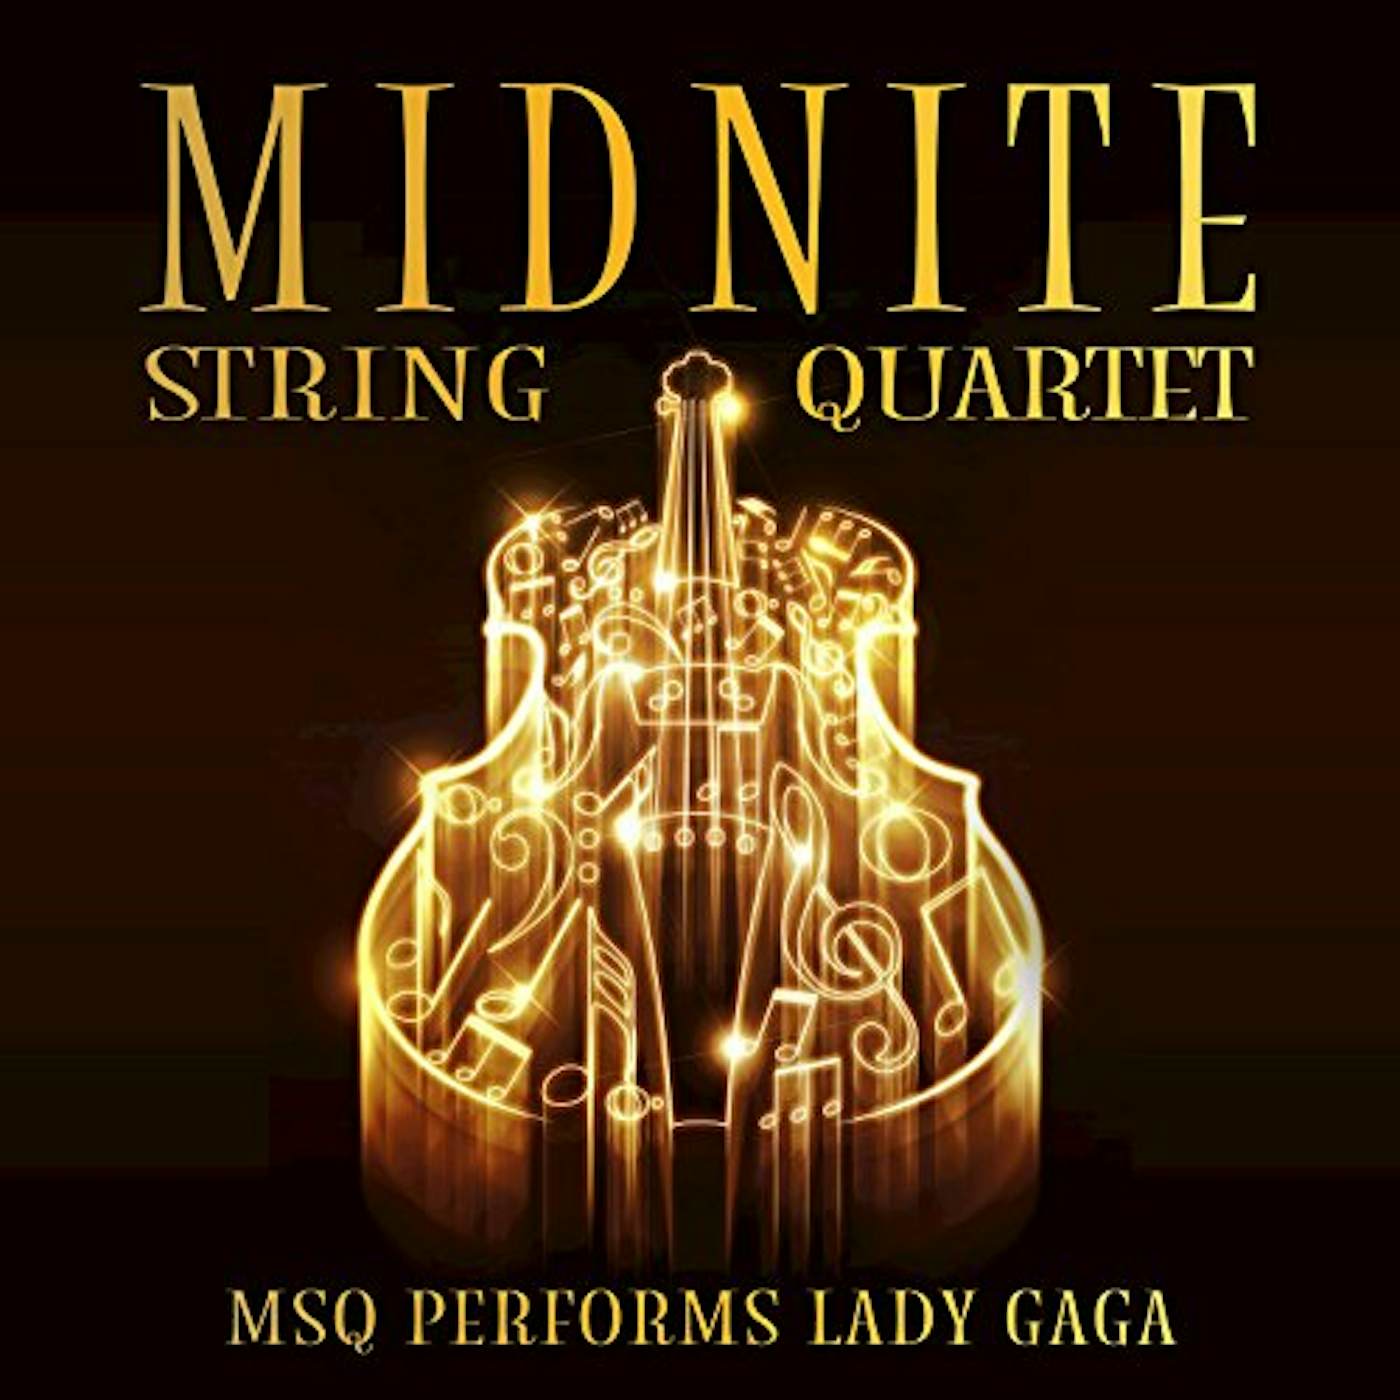 Midnite String Quartet MSQ PERFORMS LADY GAGA (MOD) CD